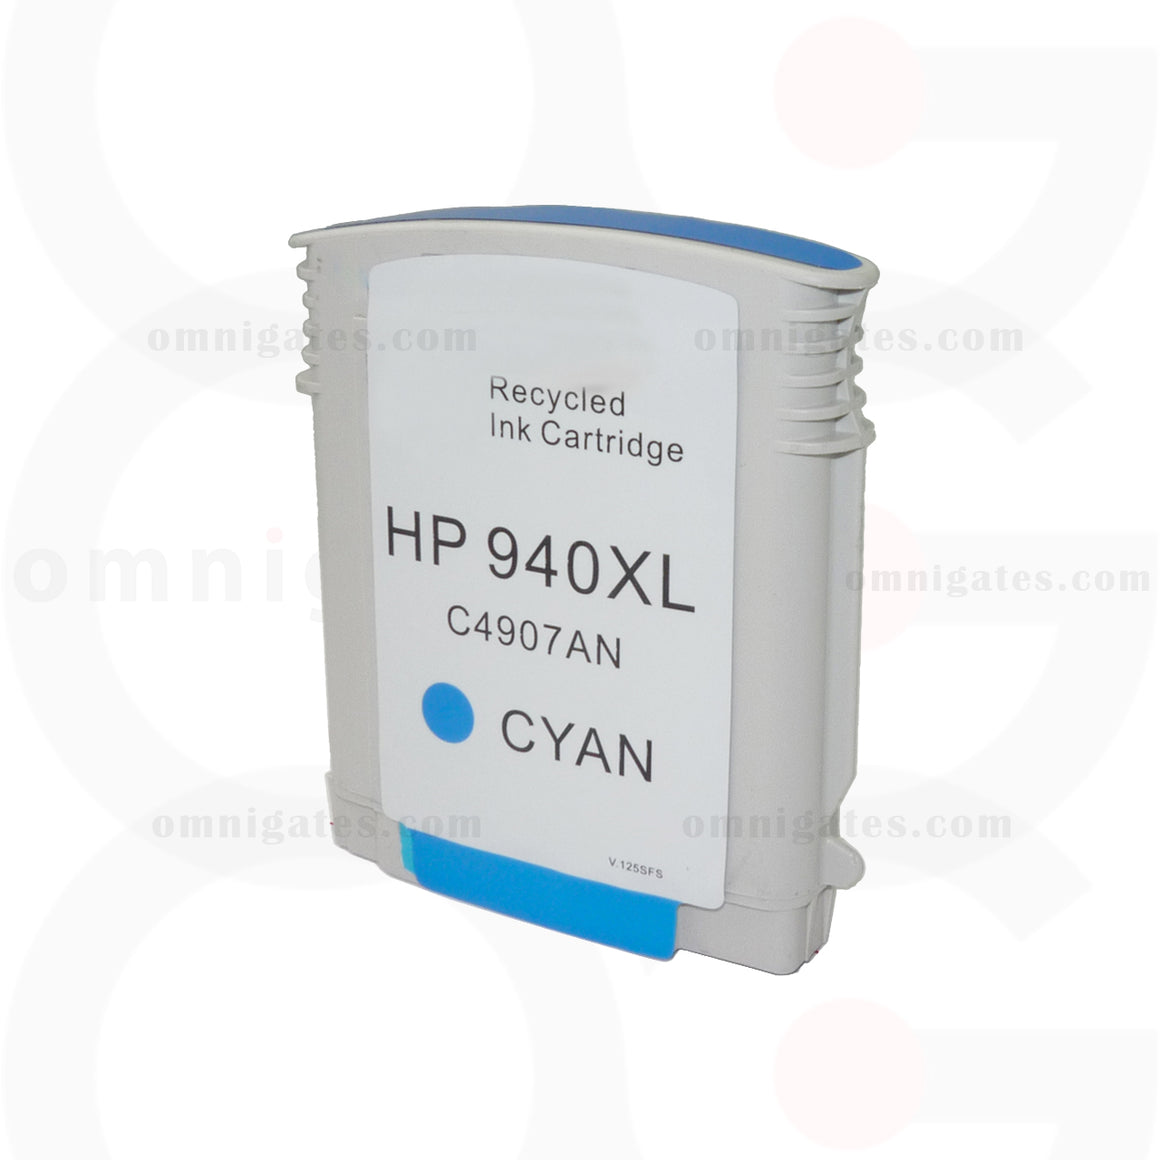 Cyan OGP Remanufactured HP C4907AN Inkjet Cartridge